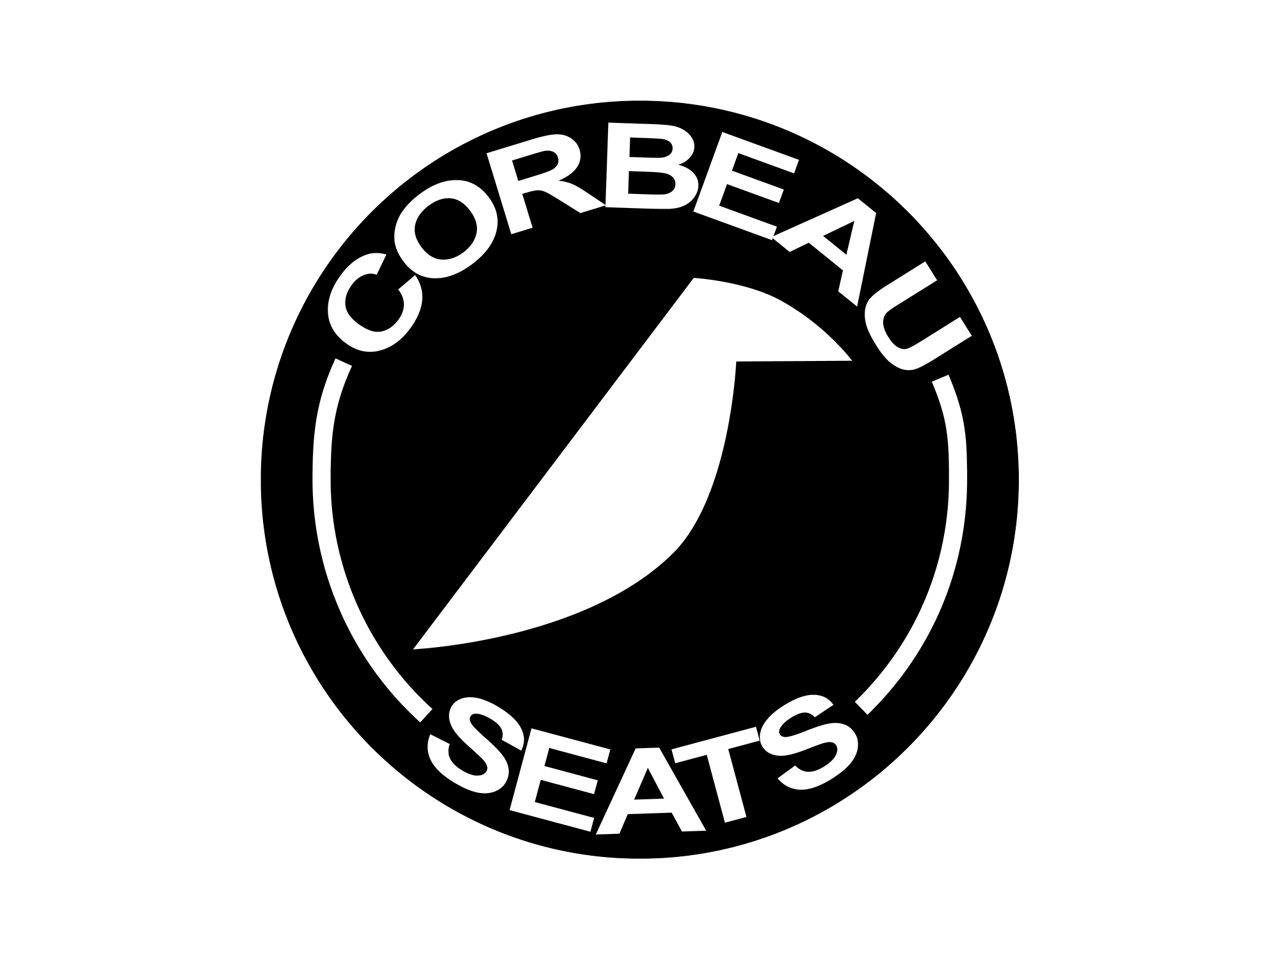 Corbeau Seats